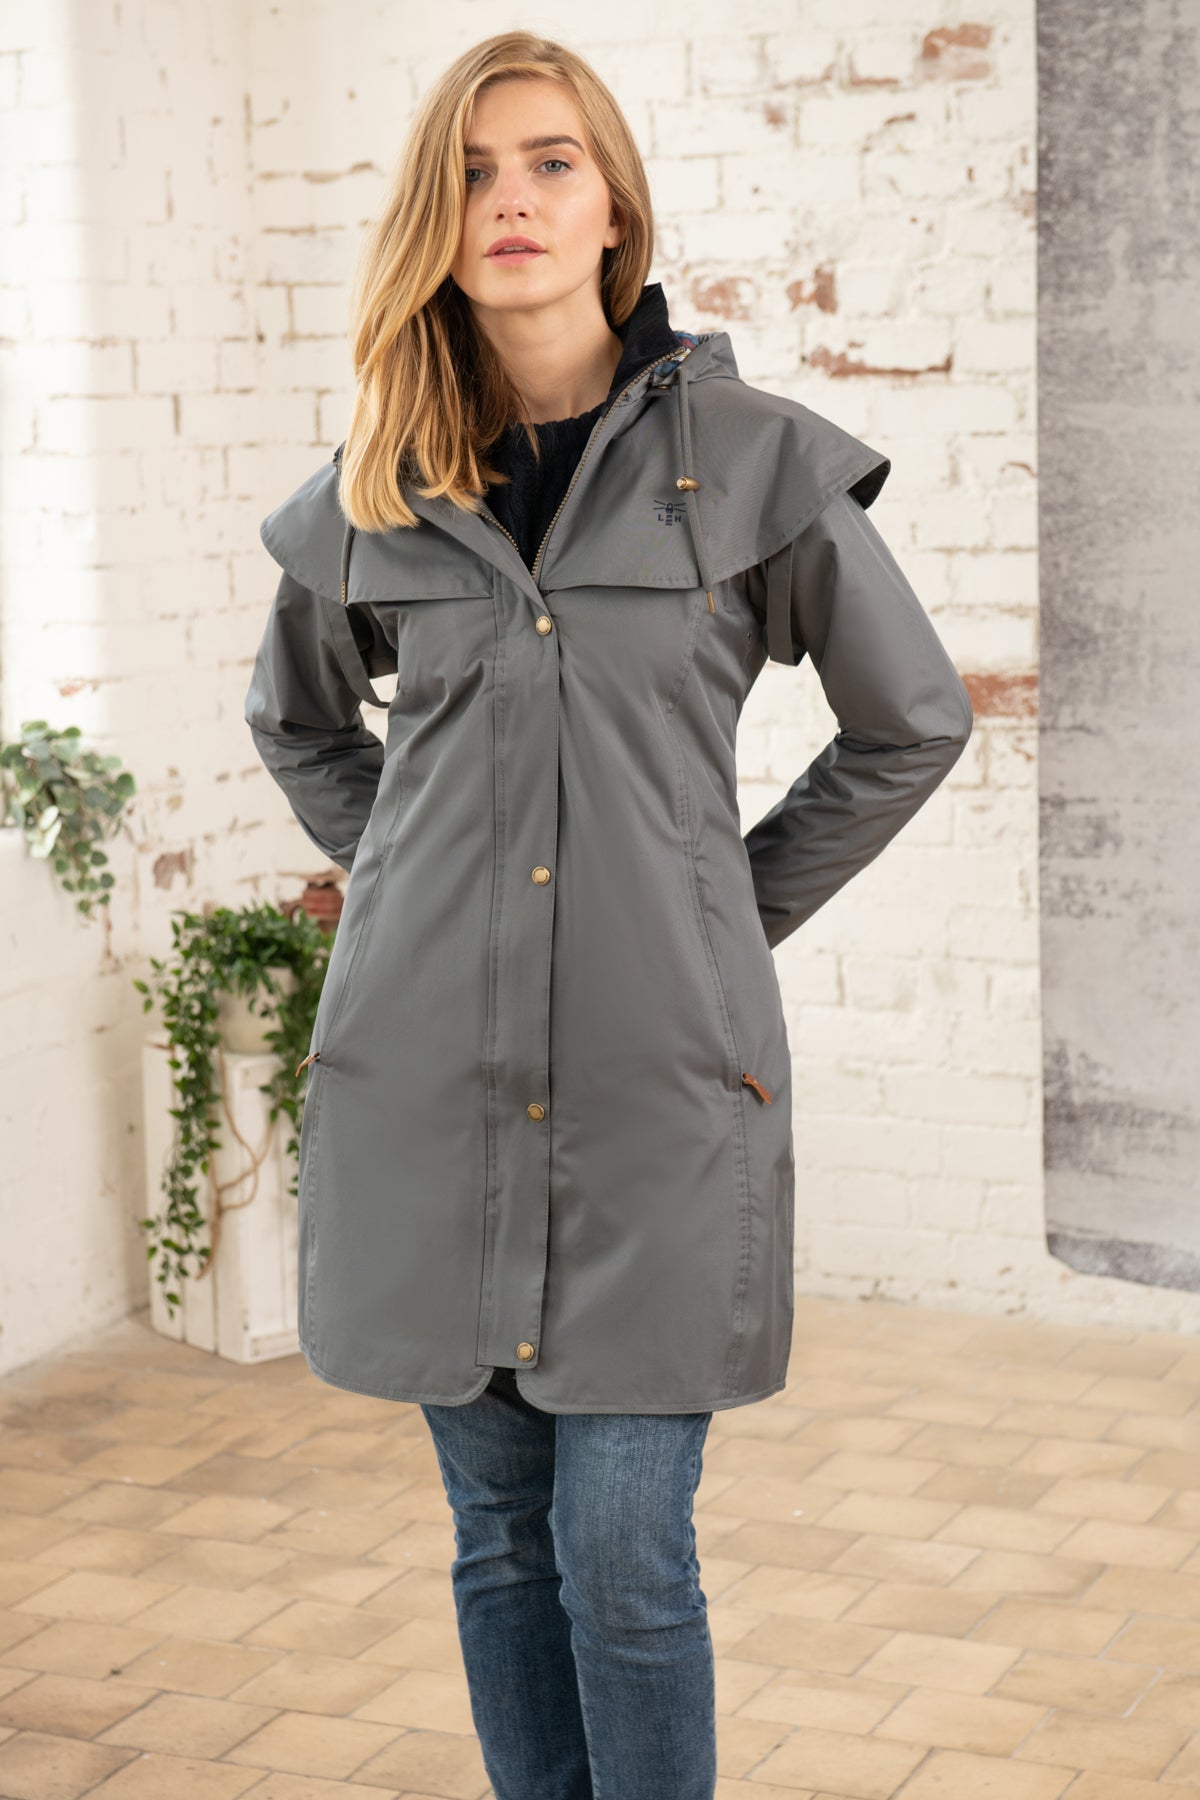 Outrider 3/4 Length Waterproof Raincoat - Urban Grey